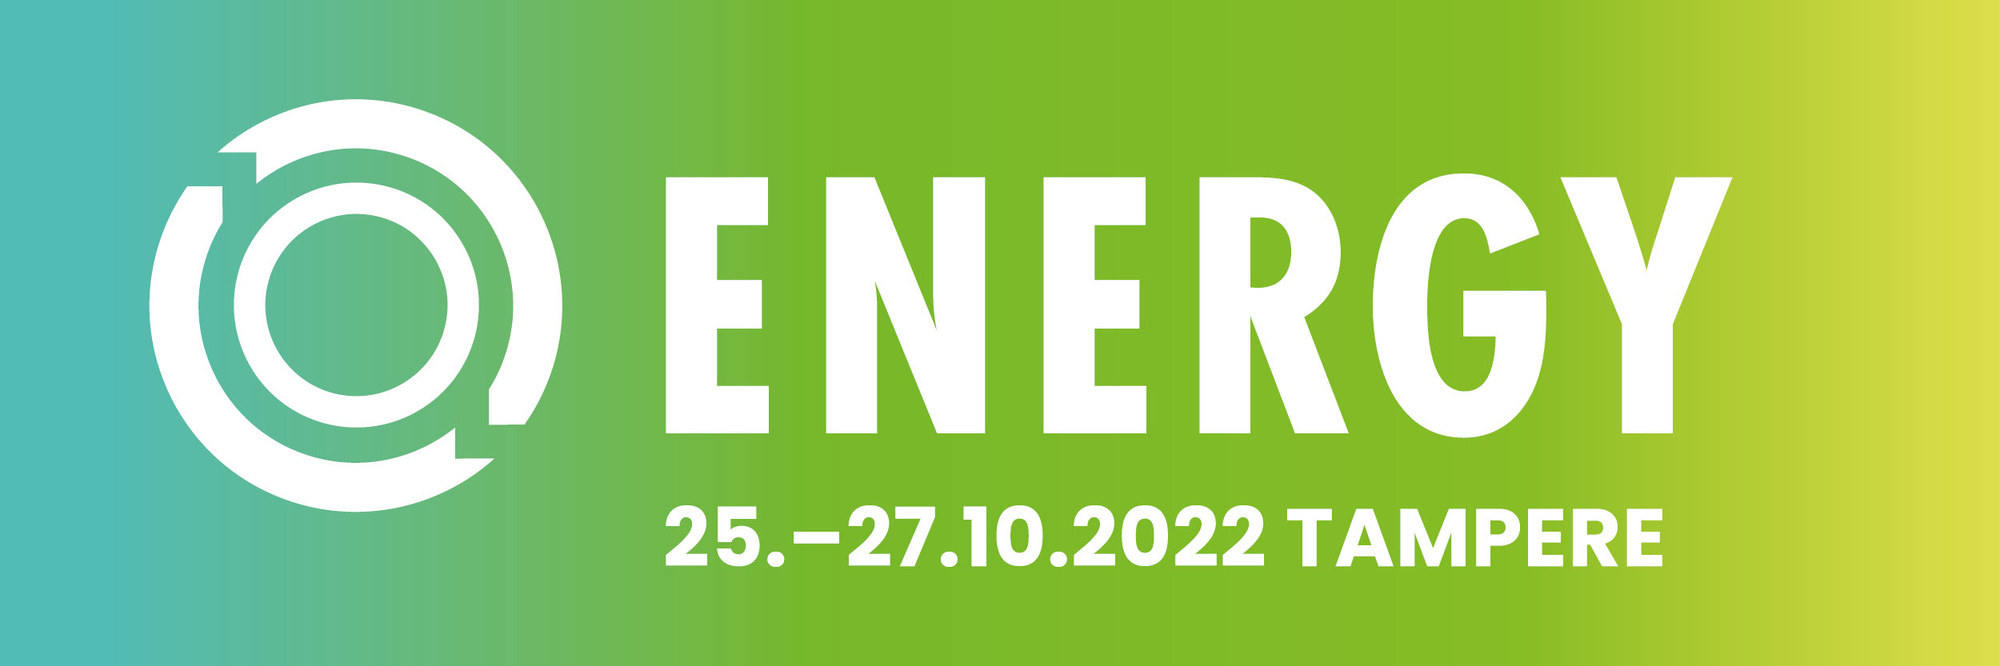 Energy 2022